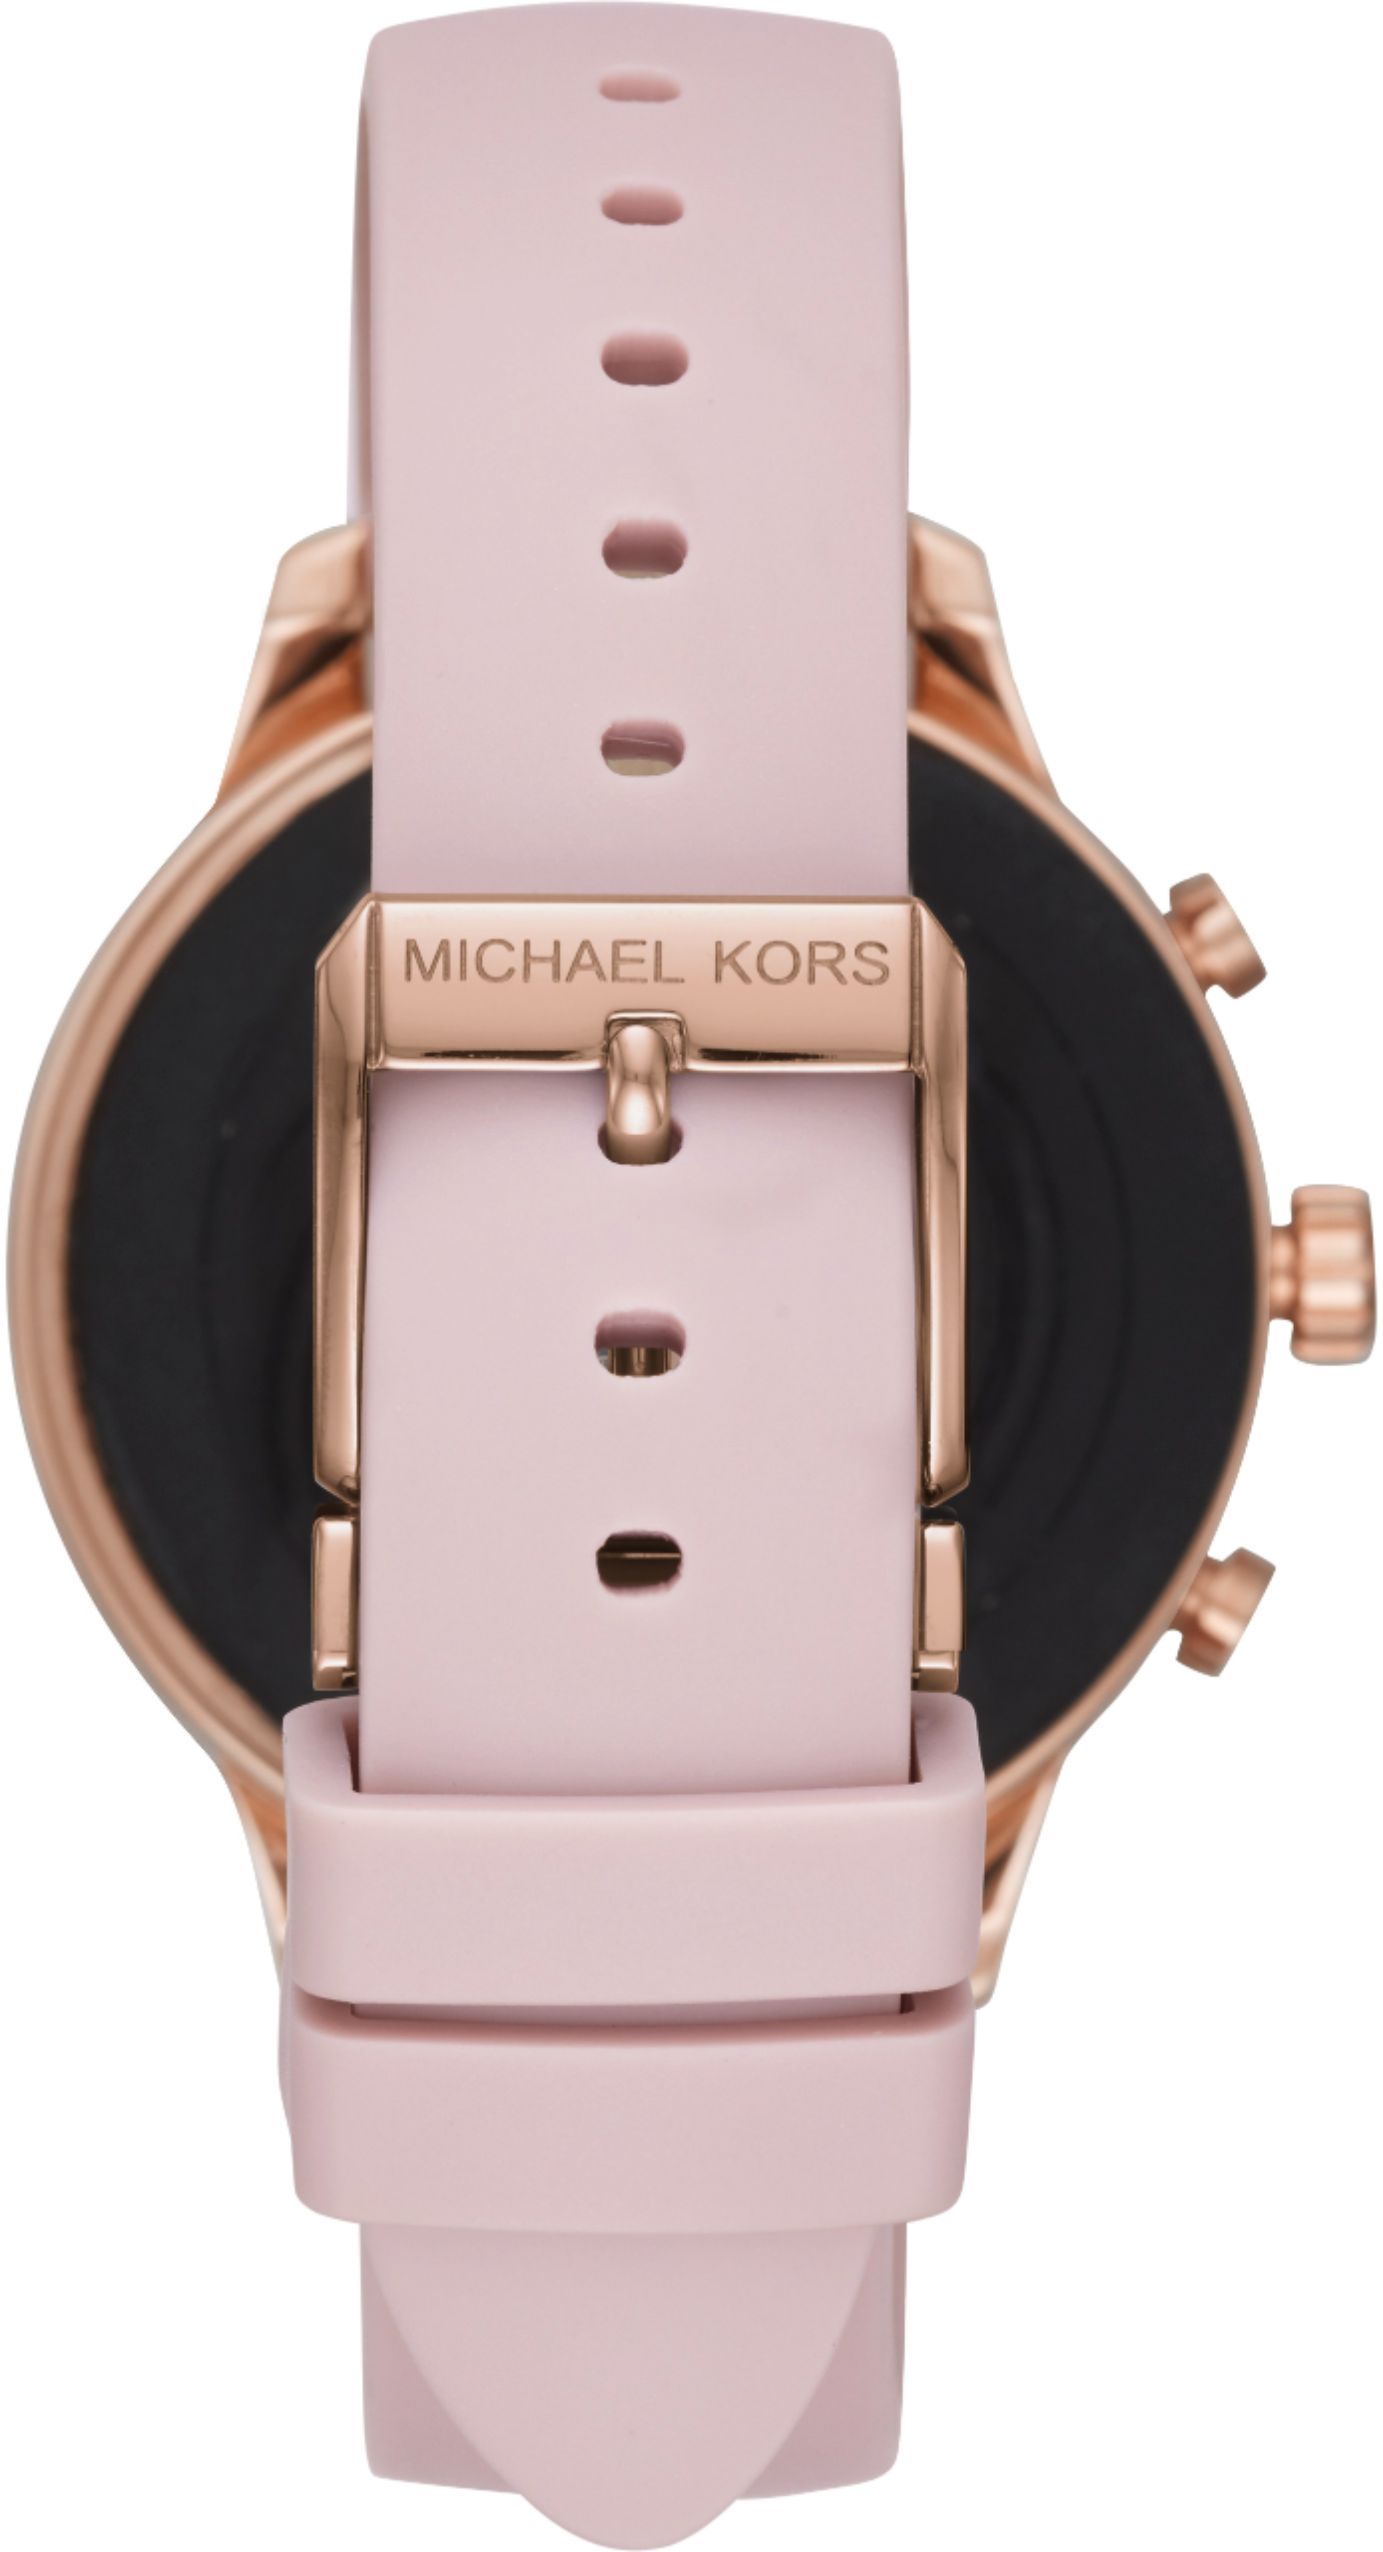 michael kors runway smartwatch back fell off